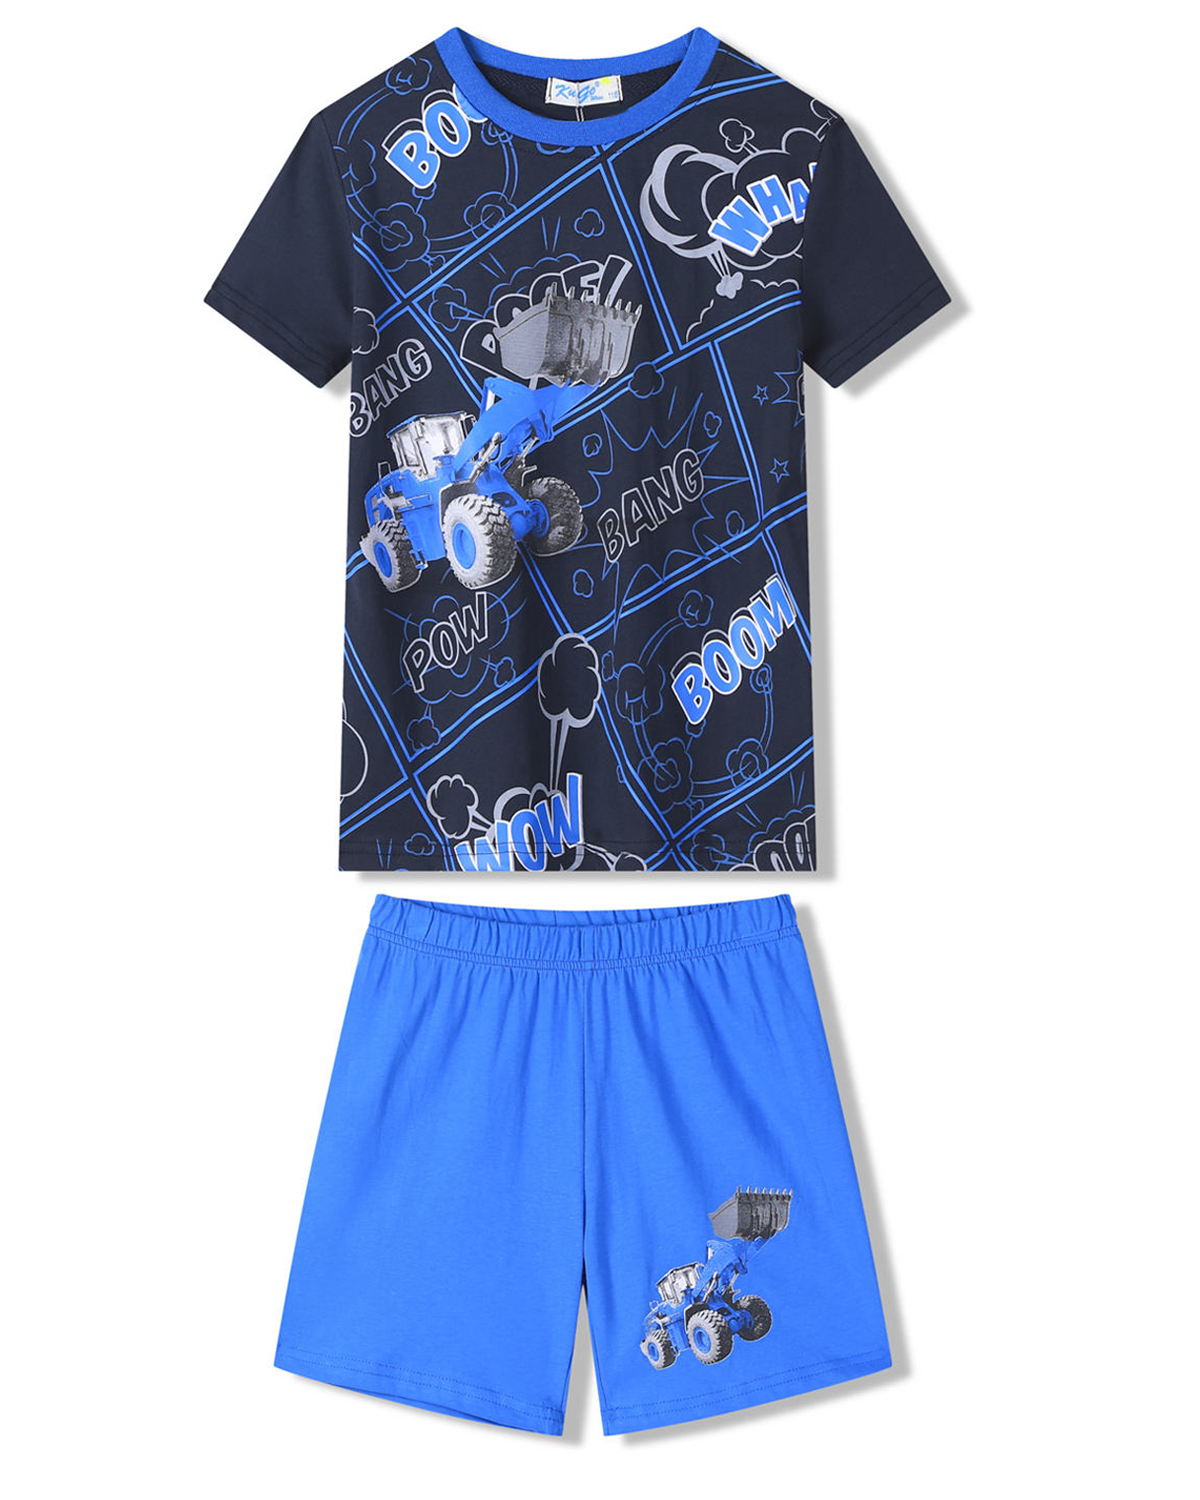 Chlapecké pyžamo - KUGO WT7310, tmavě modrá Barva: Modrá tmavě, Velikost: 98